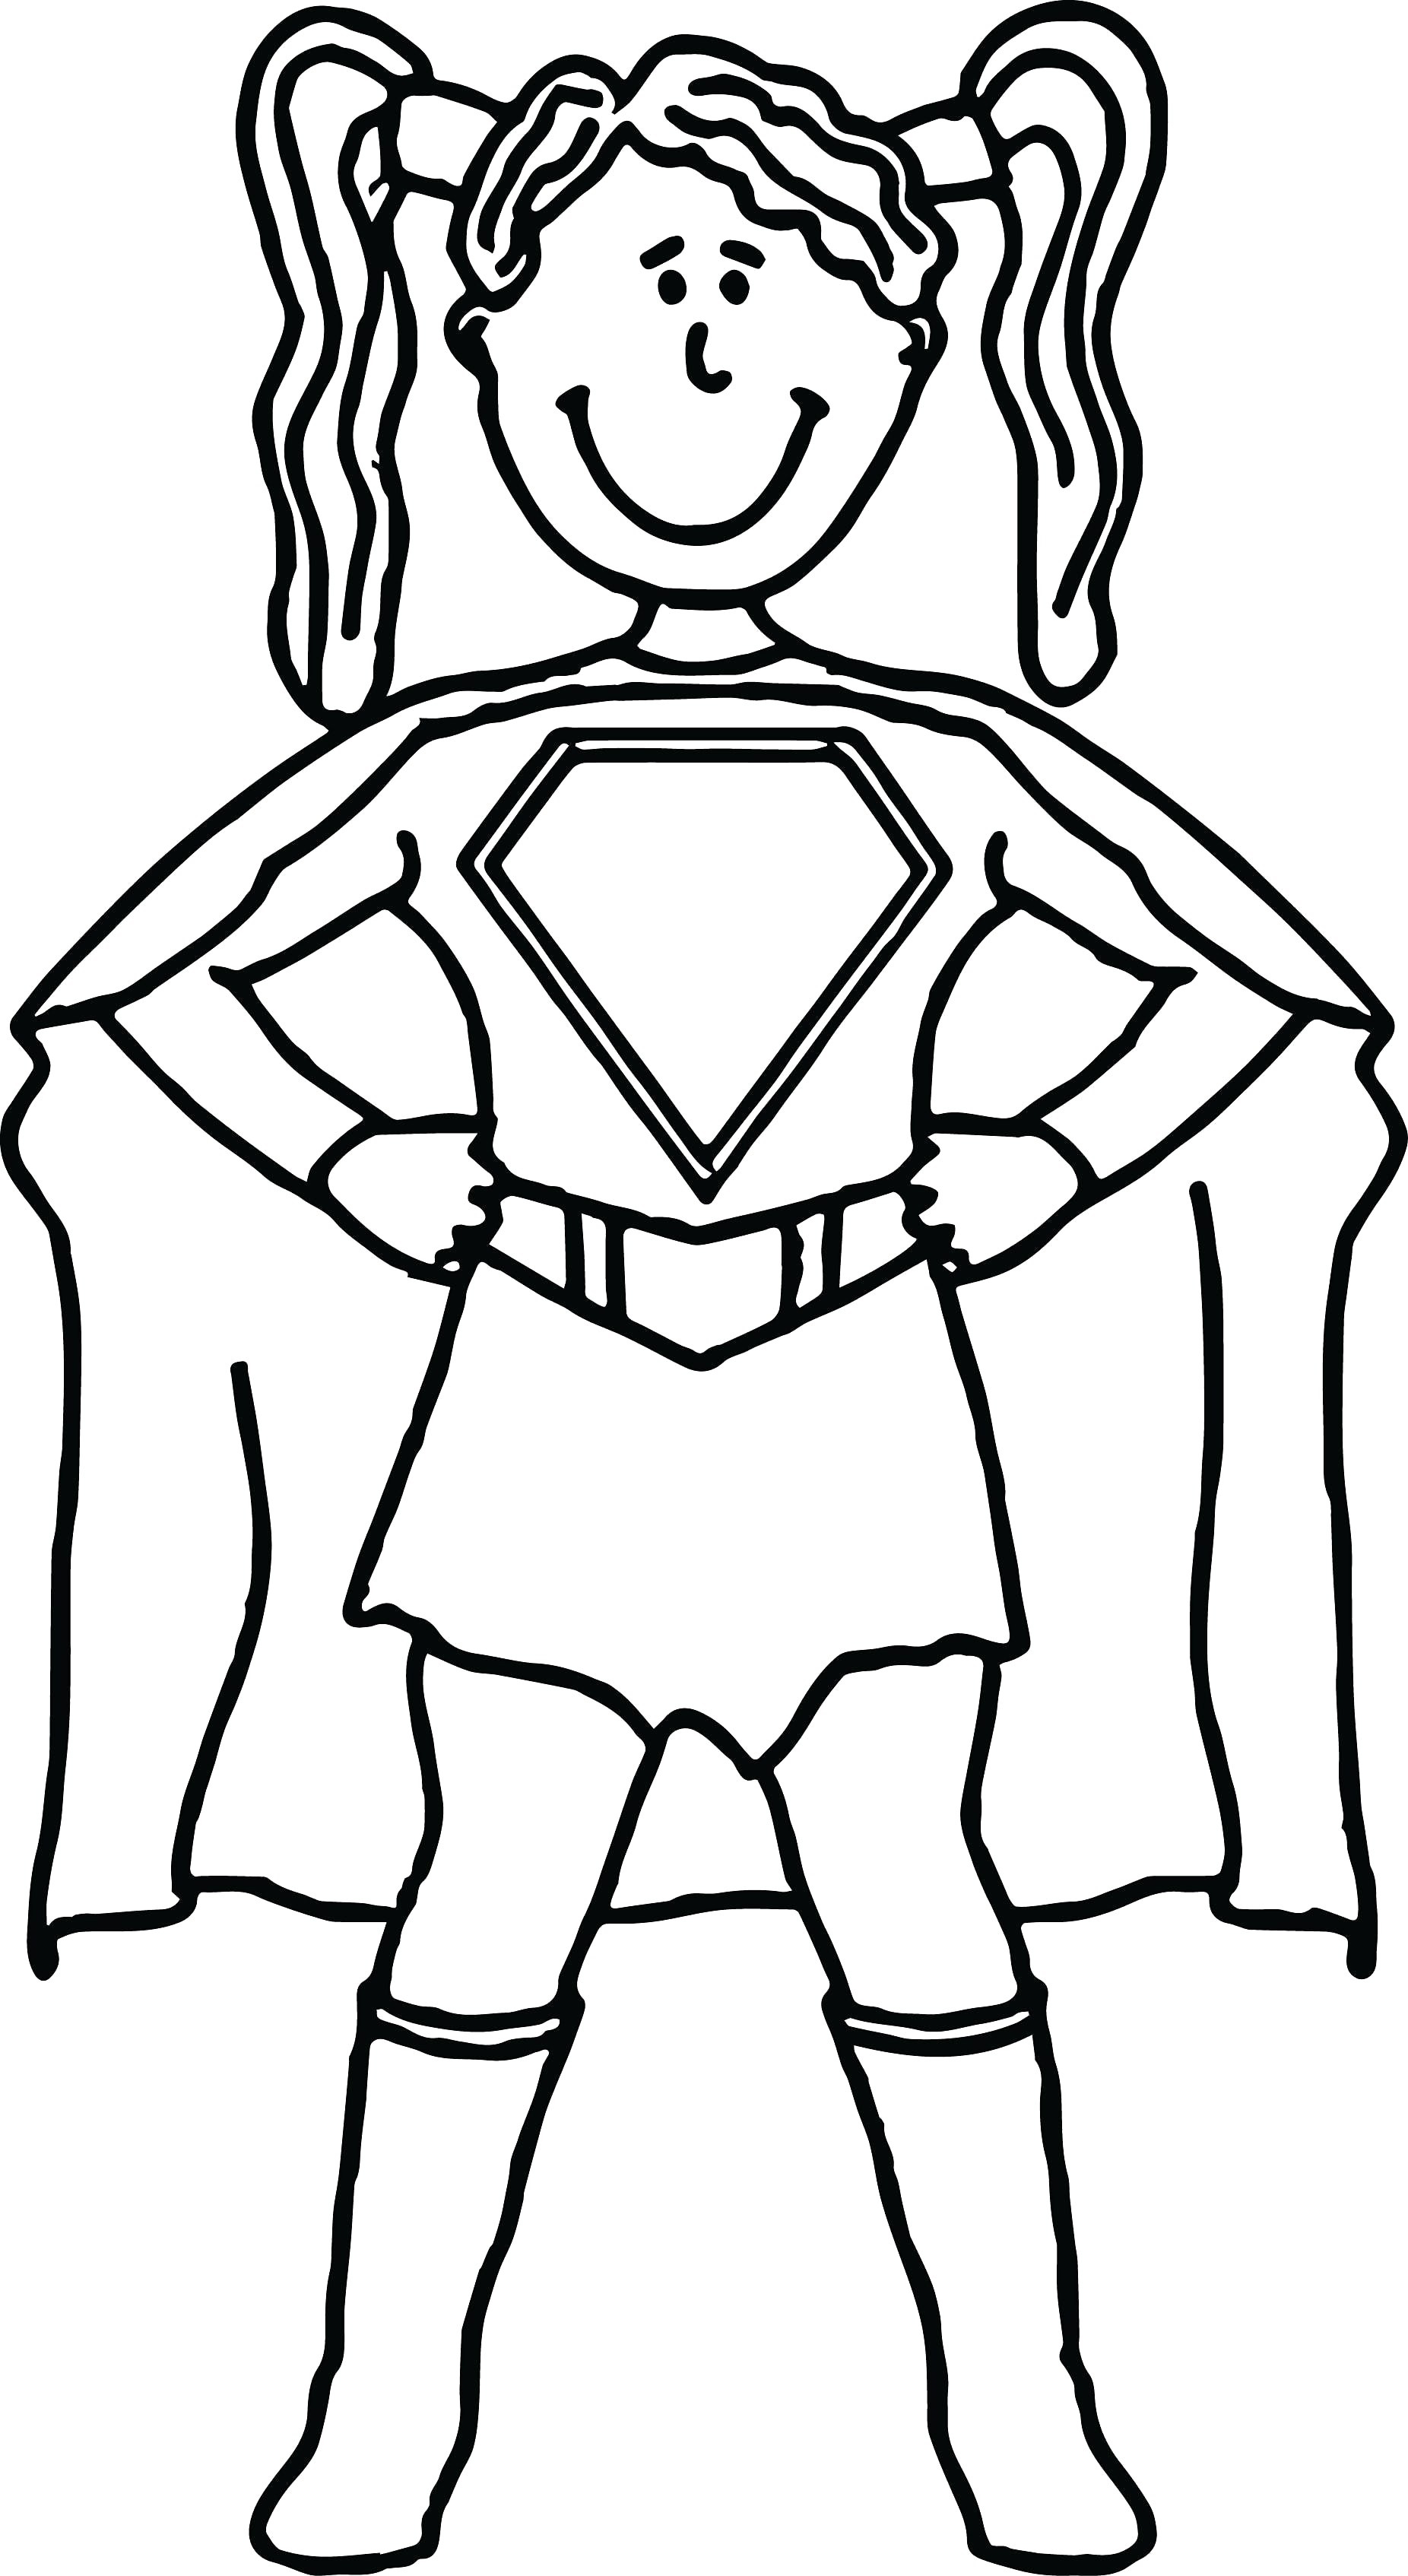 Superhero Cartoon Coloring Pages at GetColorings.com | Free printable ...